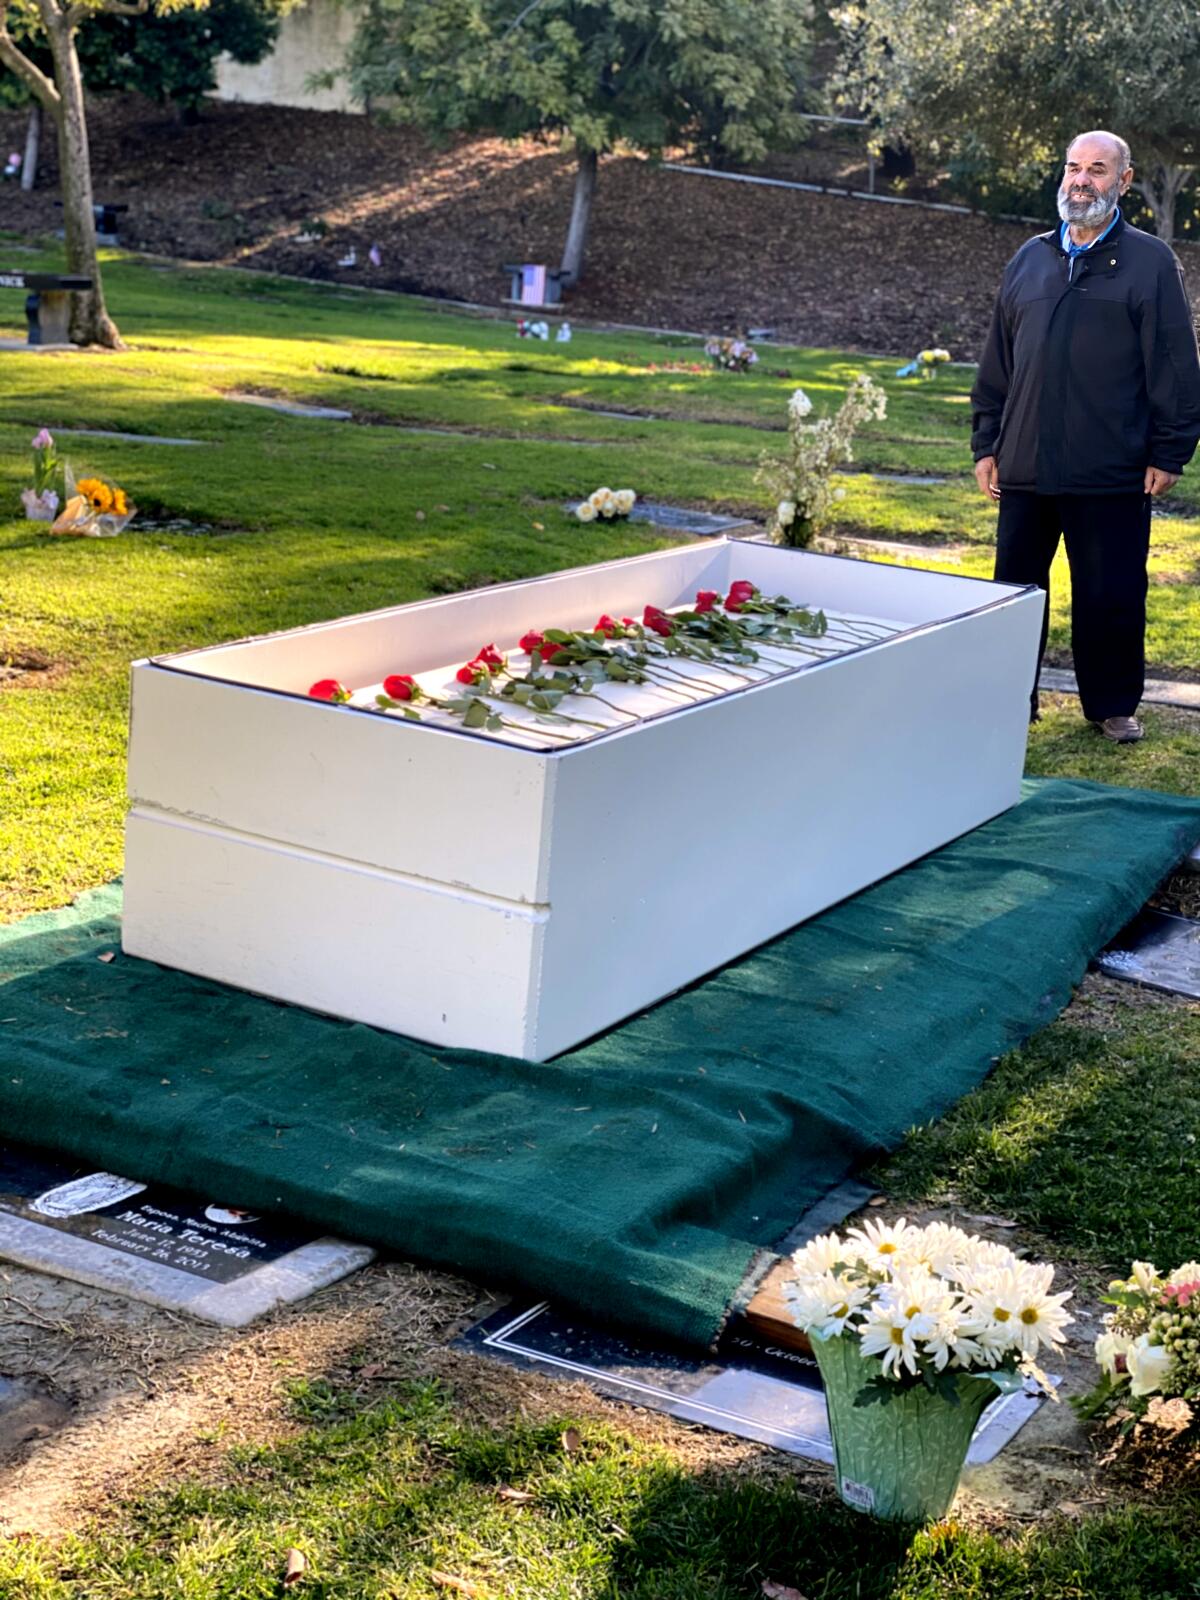 A man stands over a coffin at a graveyard 